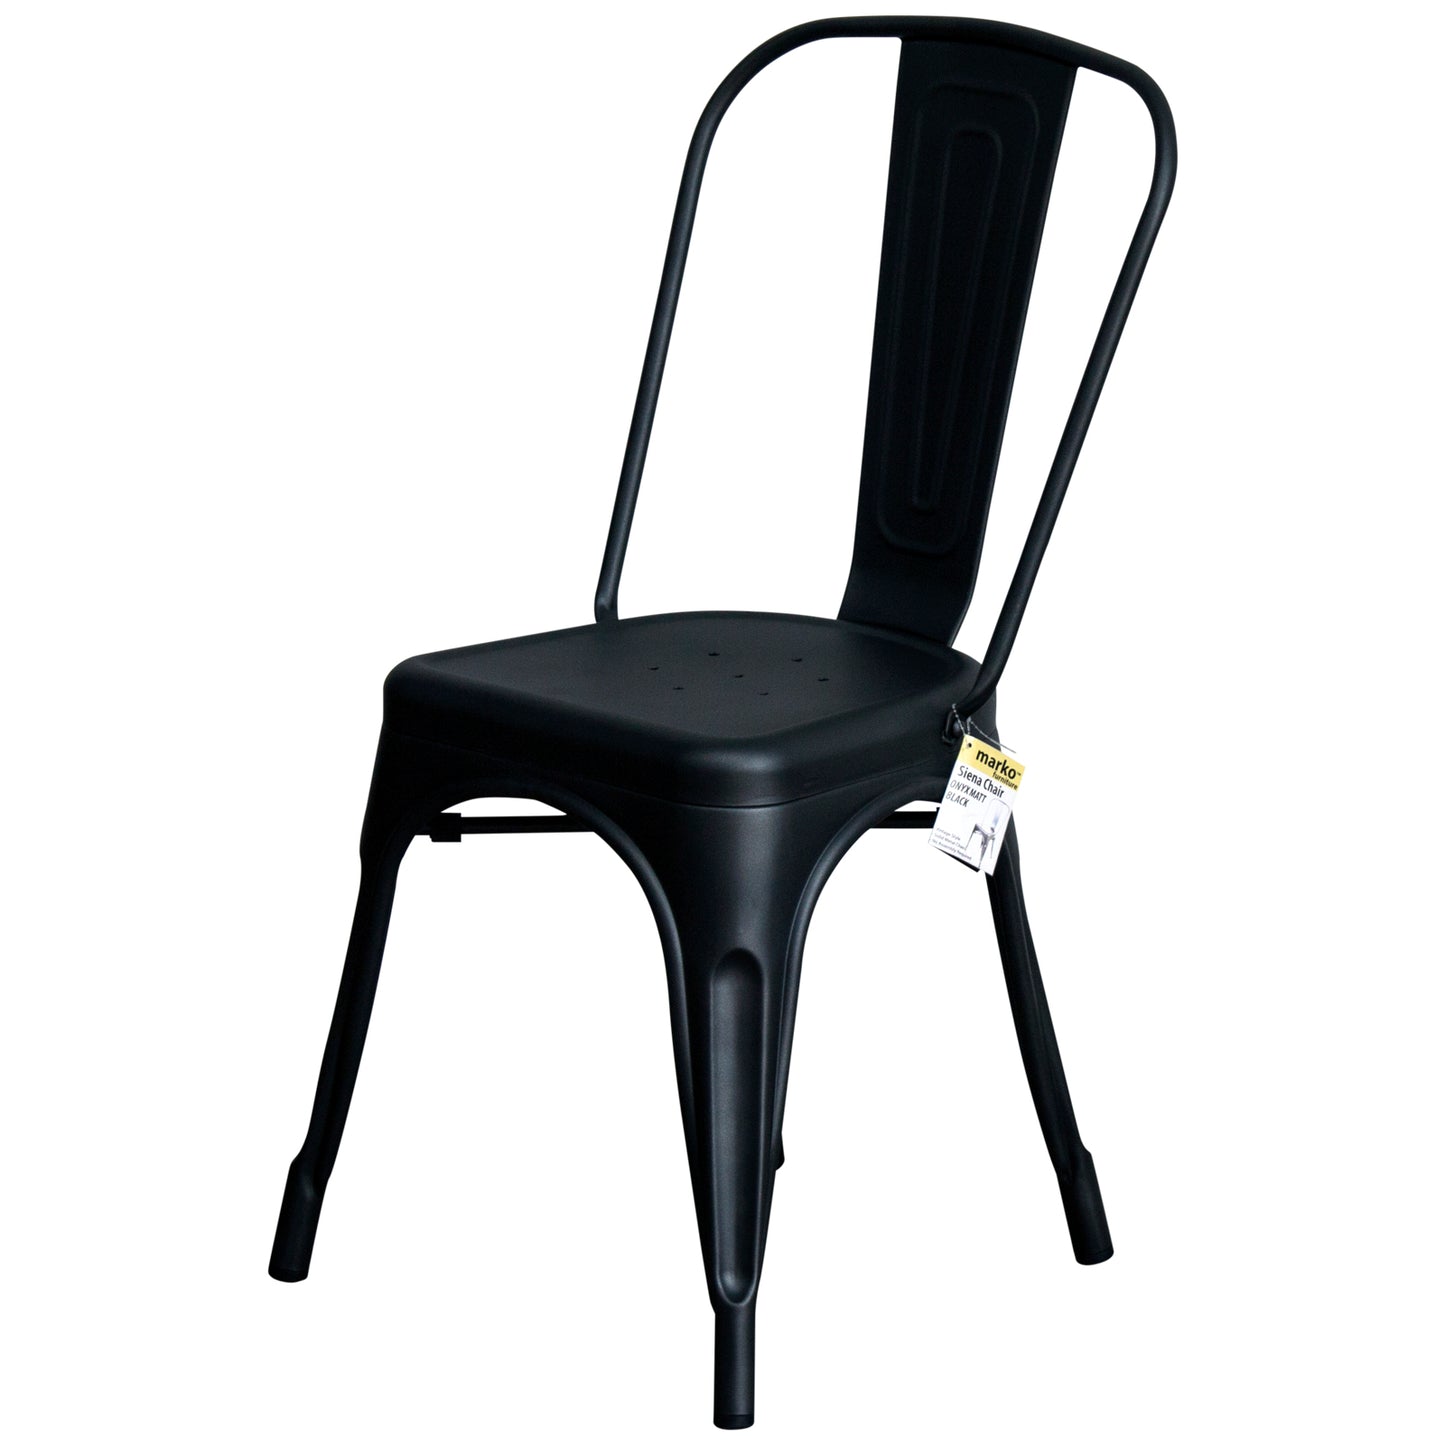 5PC Prato Table & 4 Siena Chairs Set - Onyx Matt Black